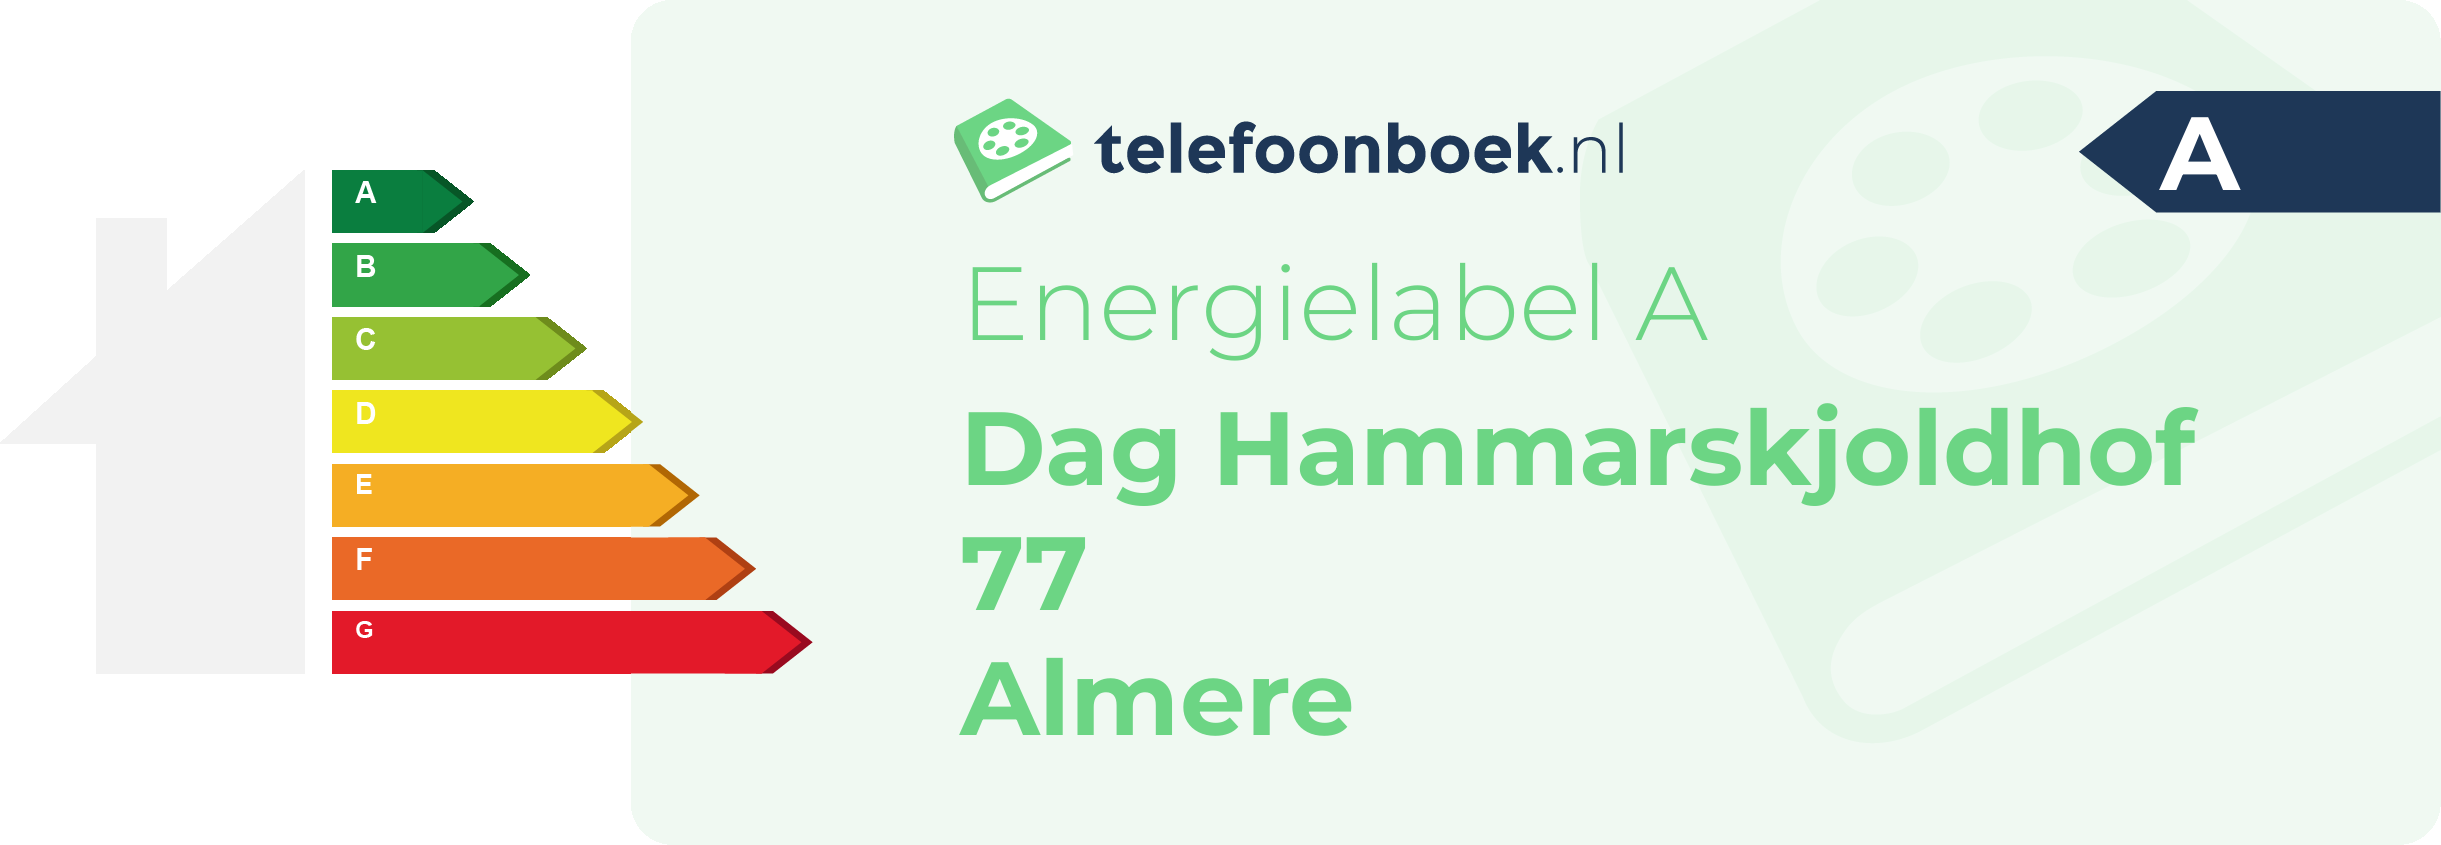 Energielabel Dag Hammarskjoldhof 77 Almere